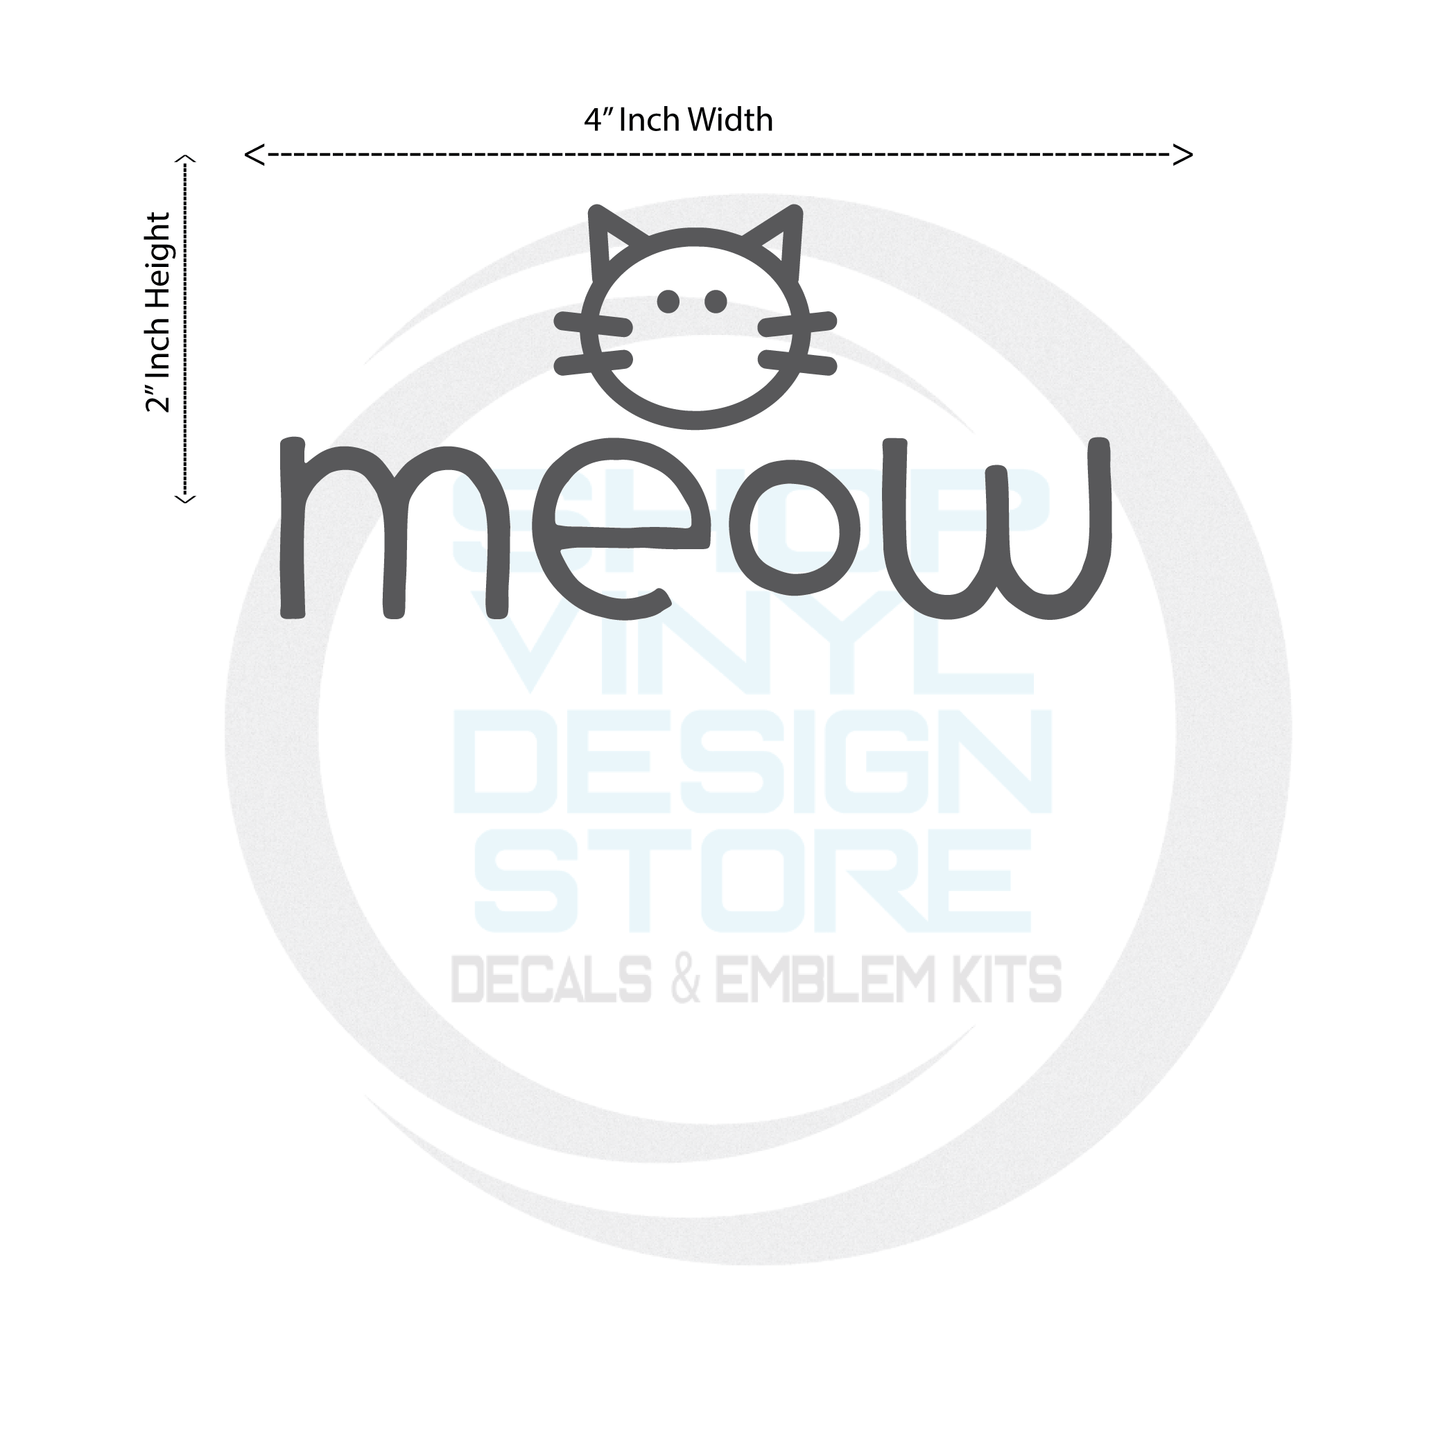 ShopVinylDesignStore.com Meow for Cat Treats Jar Wide 4"W x 2"H Shop Vinyl Design decals stickers